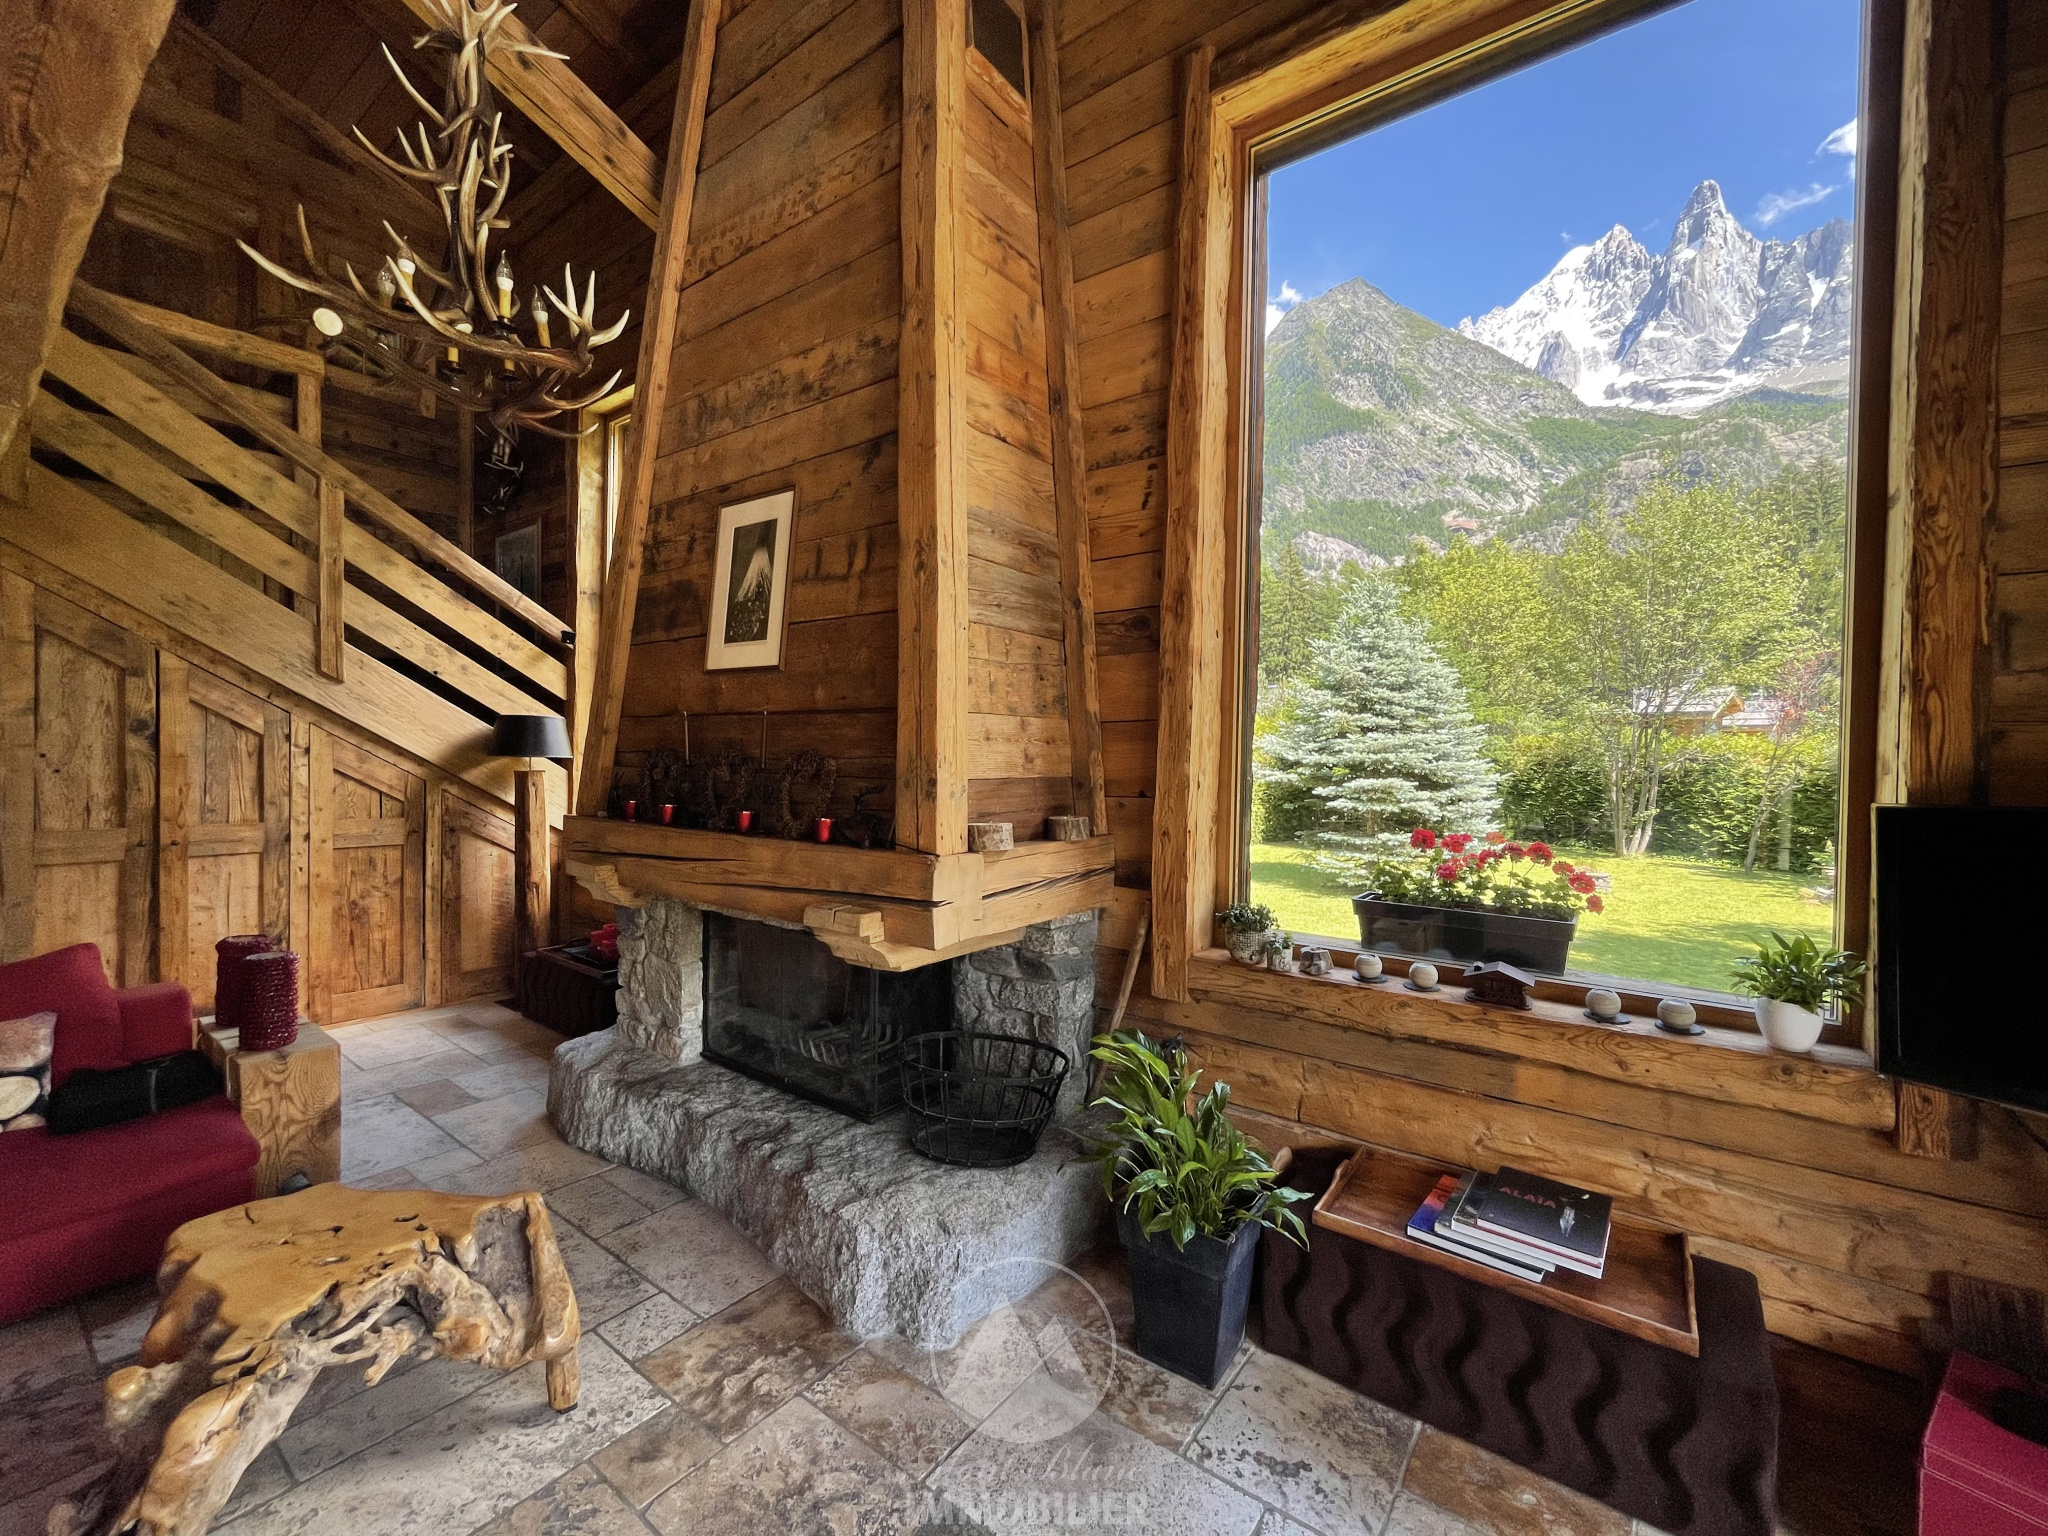 CHALET La verte WITH BEAUTIFUL AMENITIES Accommodation in Chamonix